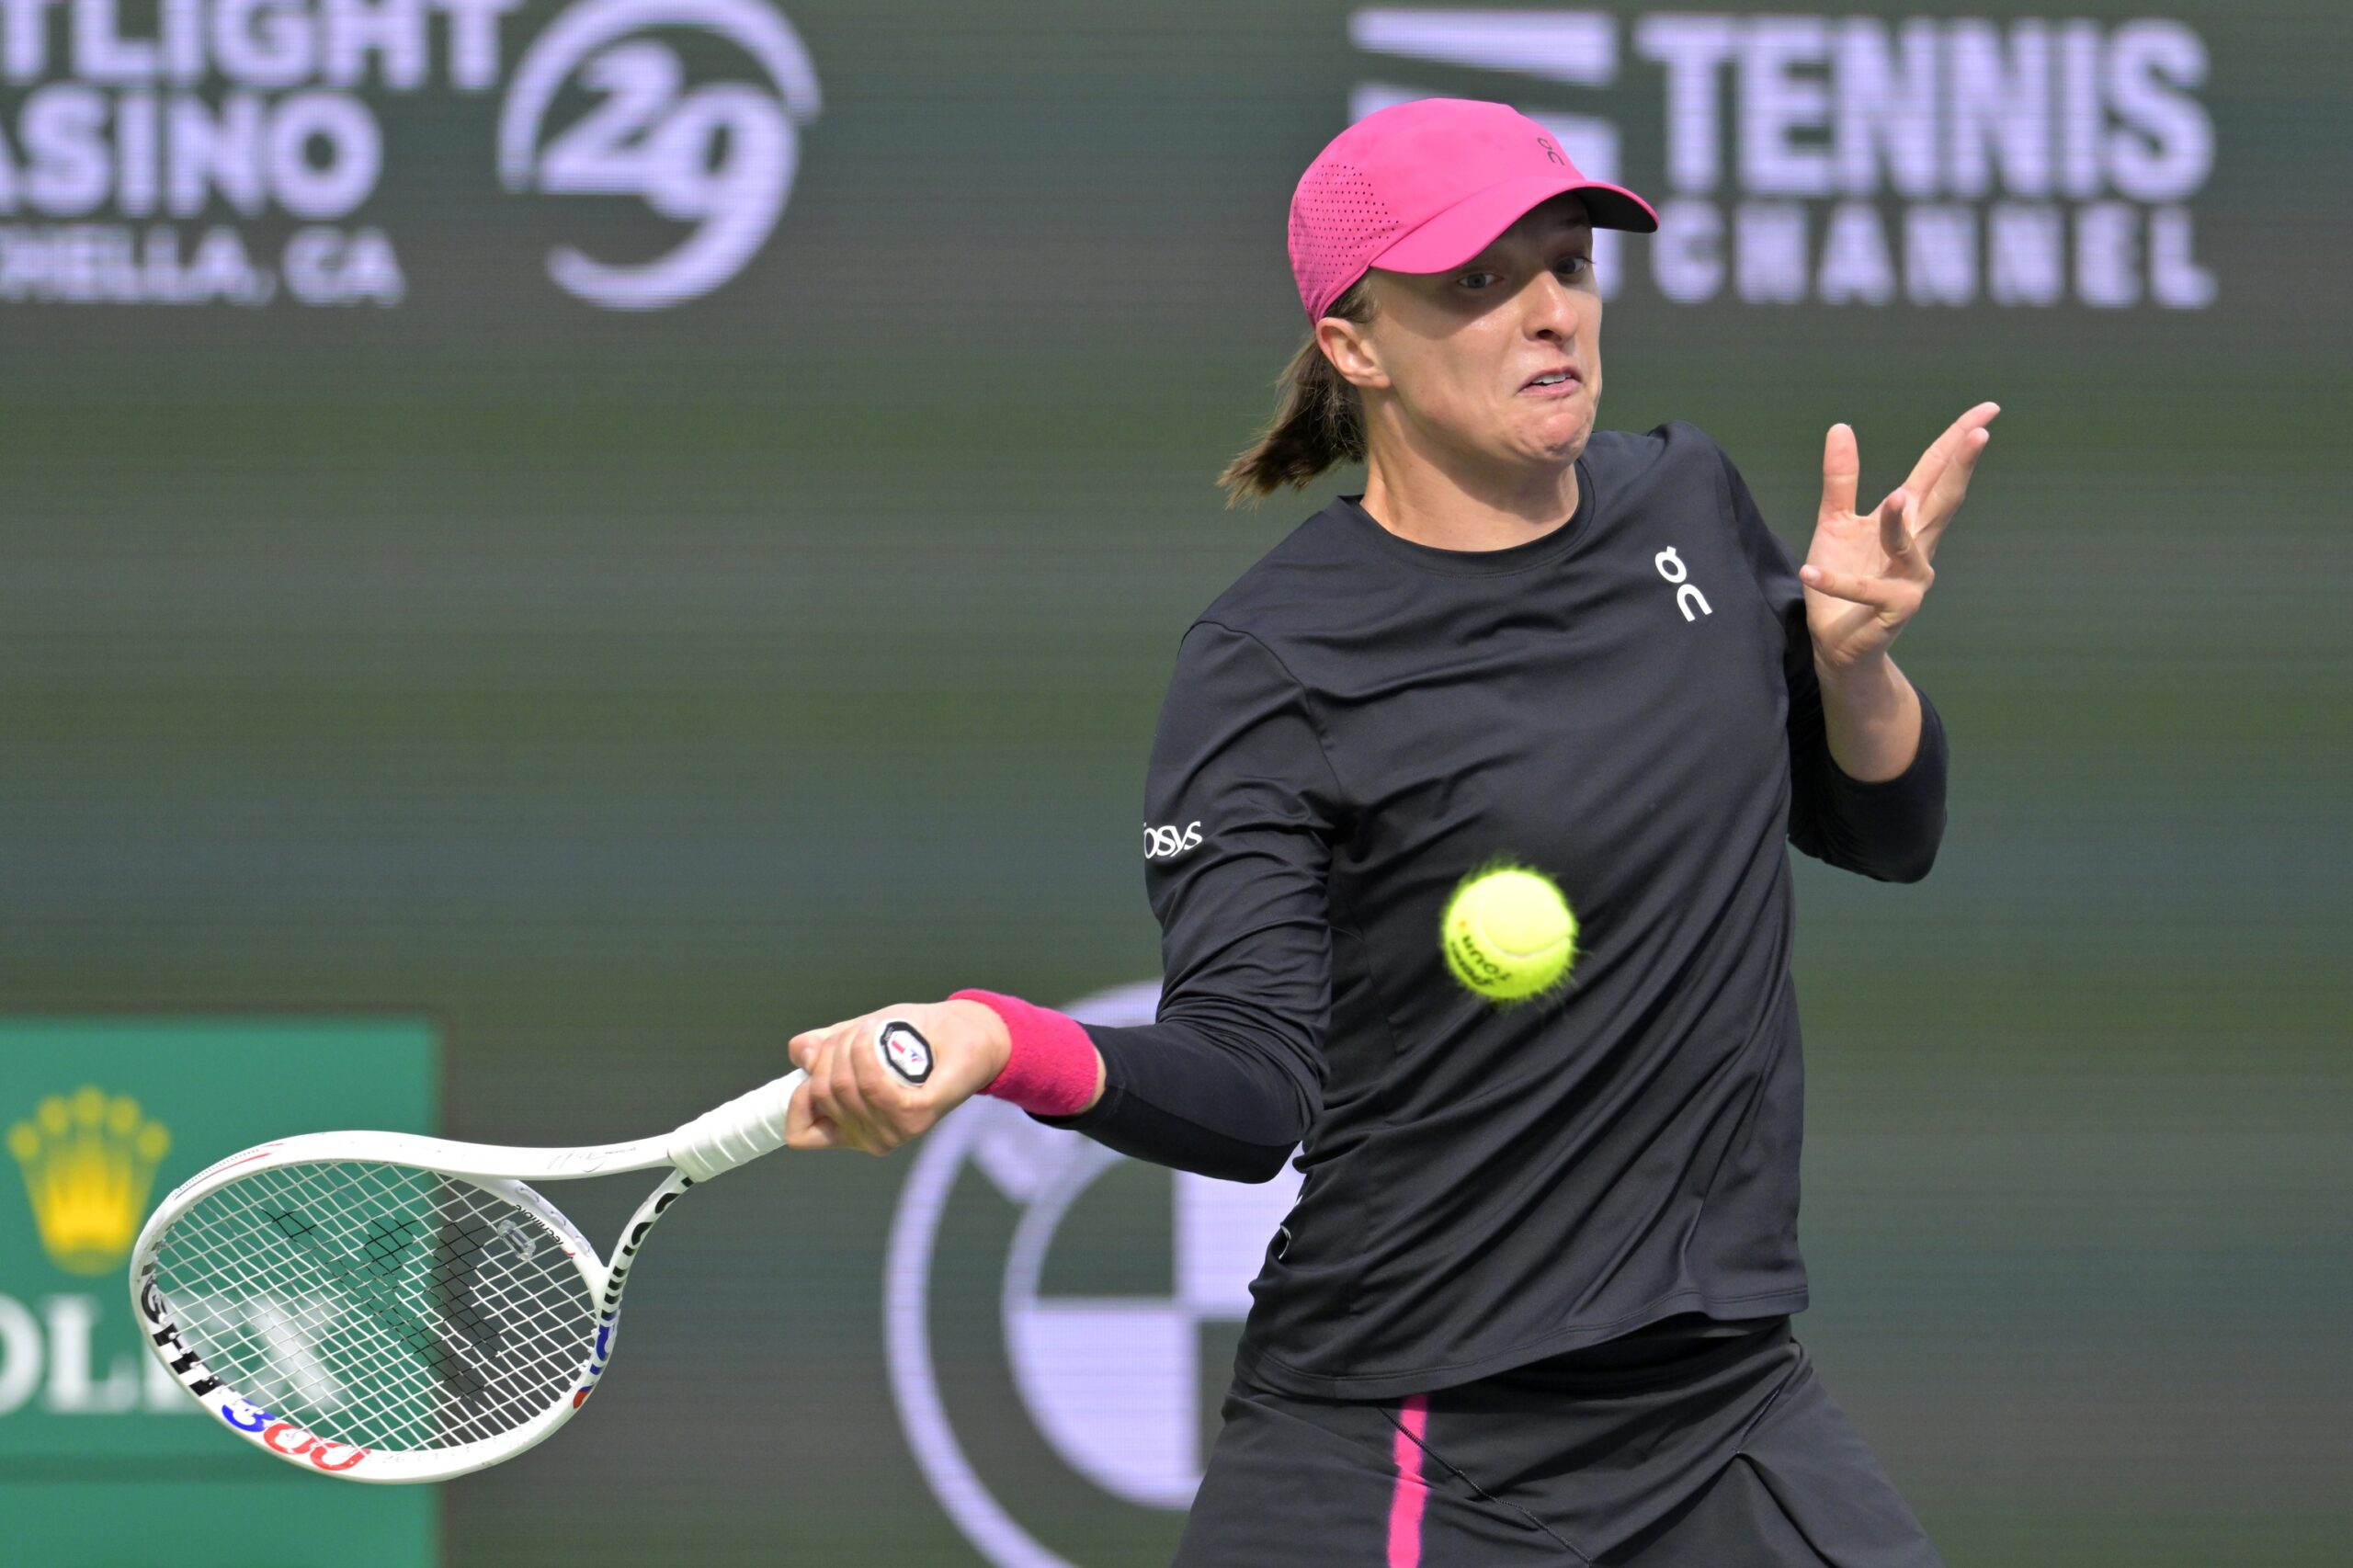 Iga Swiatek in action at the WTA Indian Wells Open.